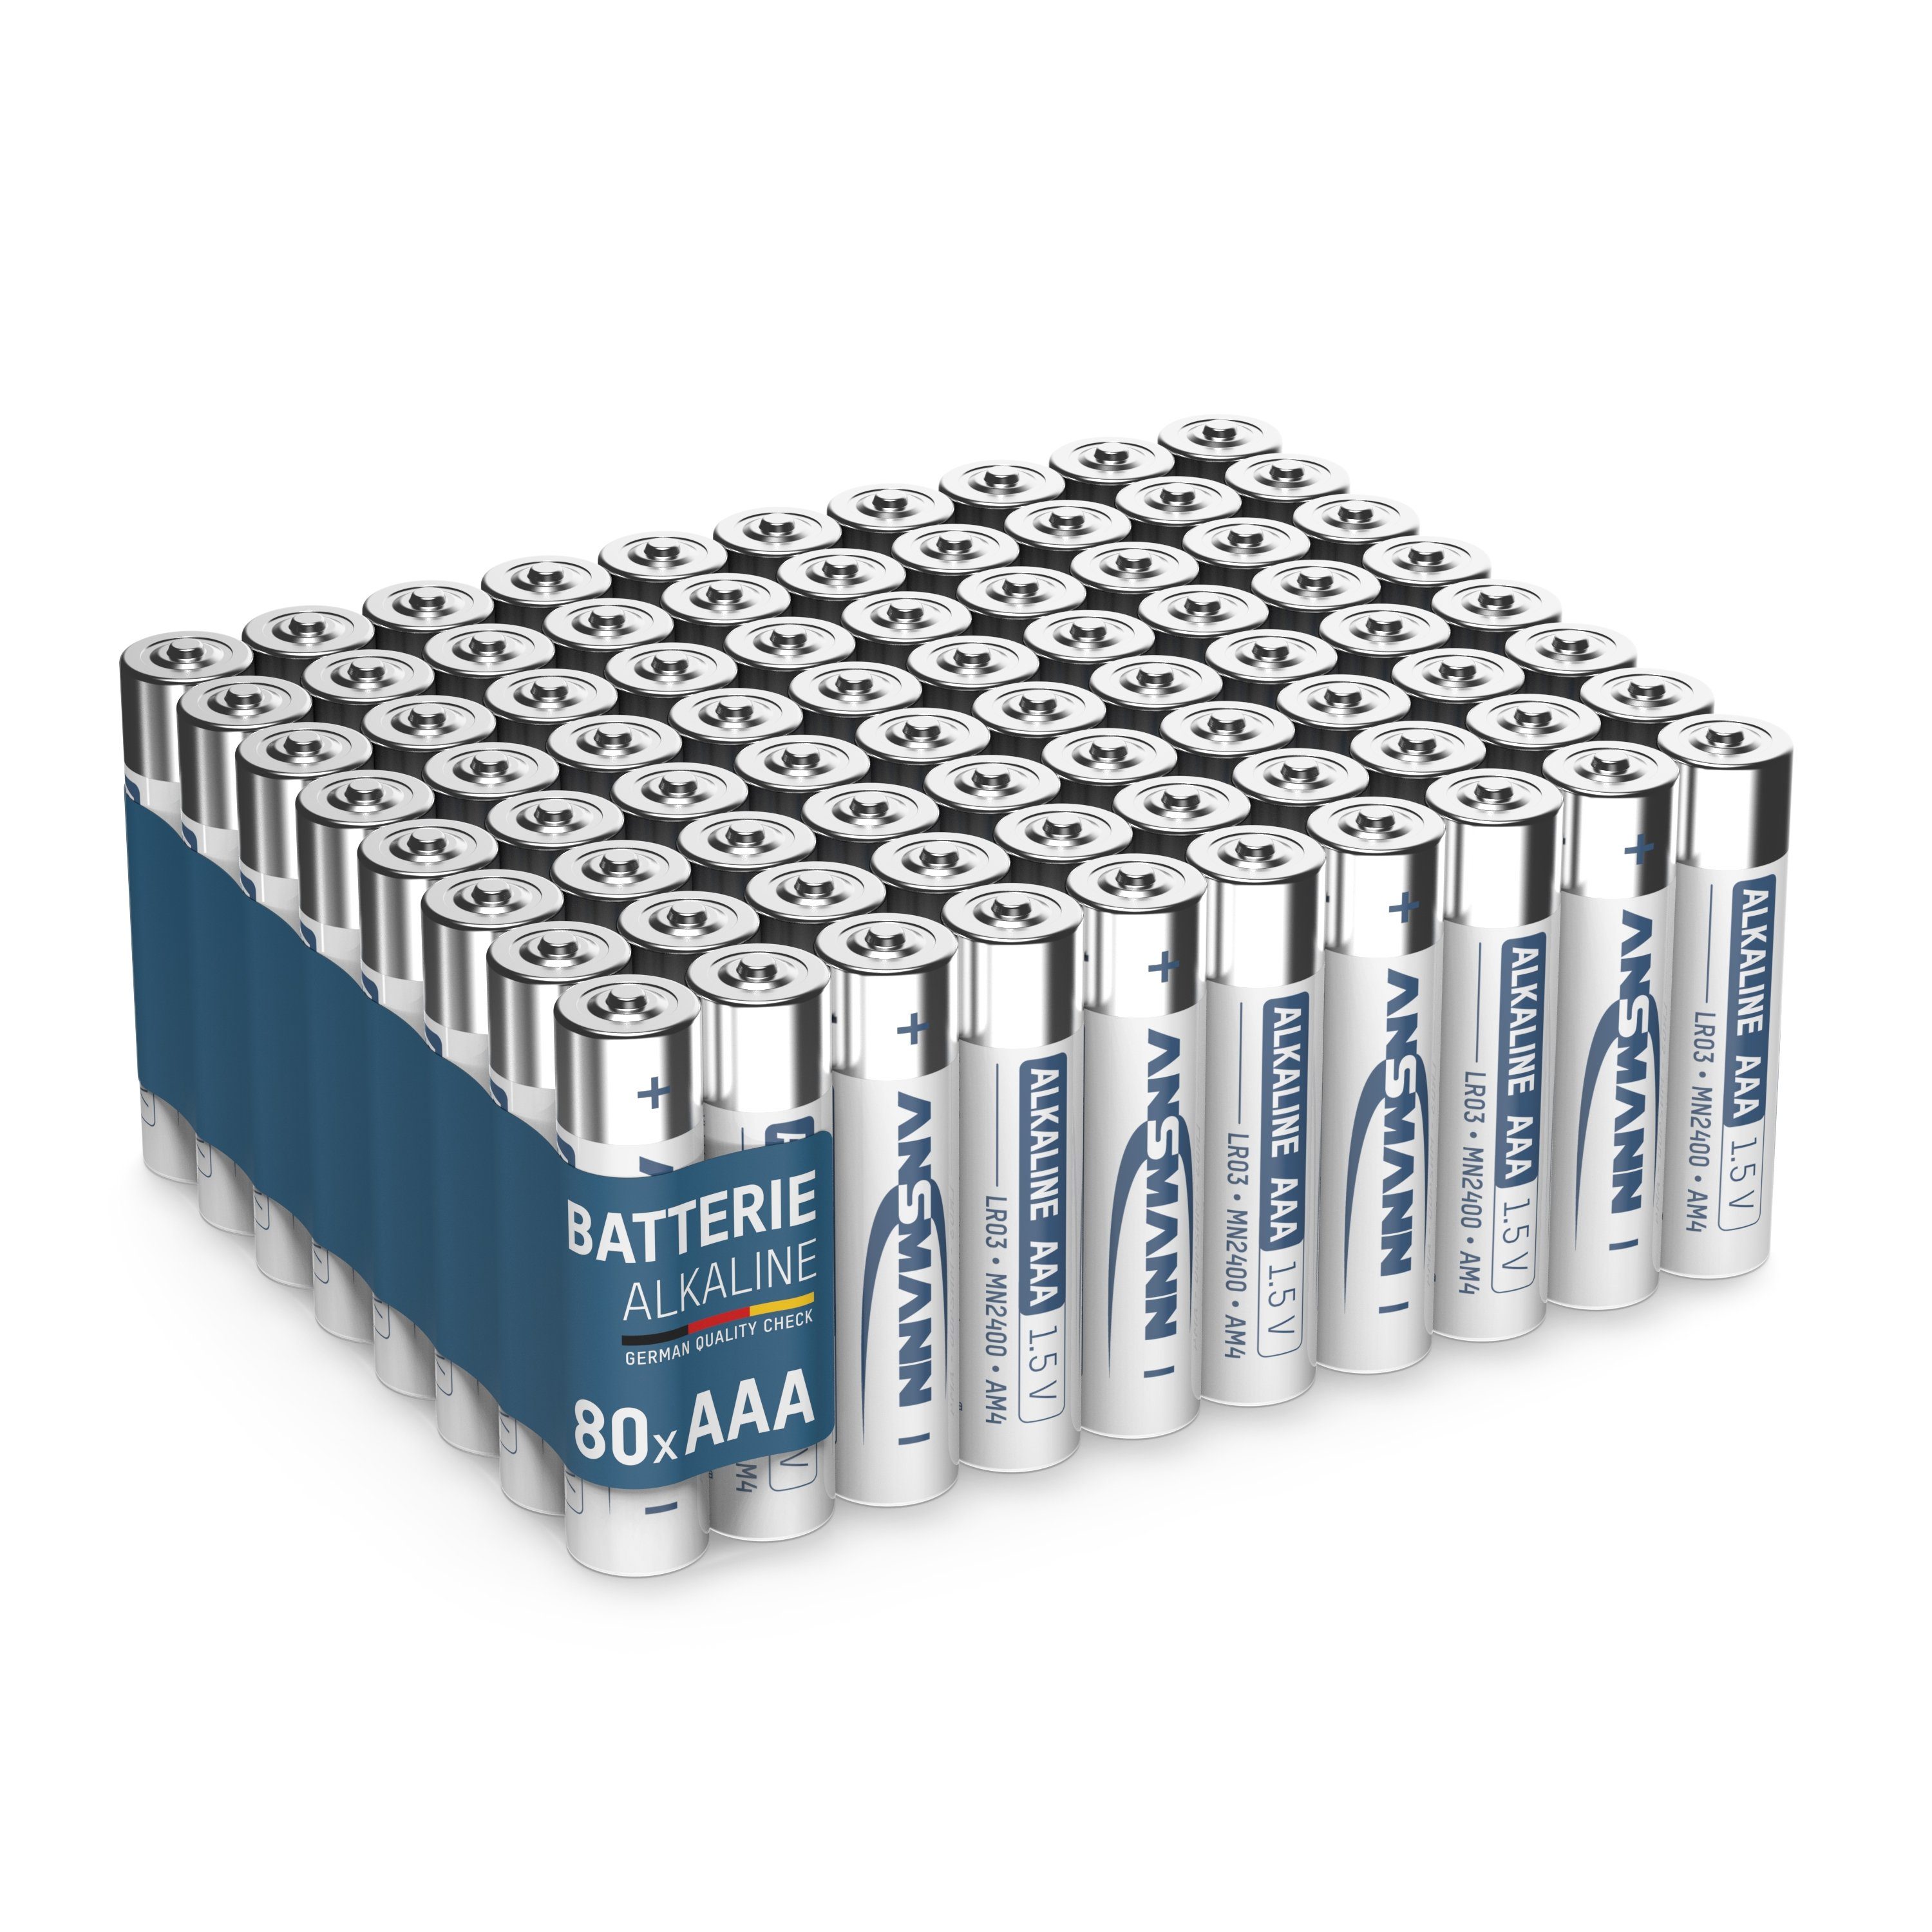 Stück Alkaline - AAA Batterien Vorratspack) ANSMANN® (80 Batterie Größe LR03